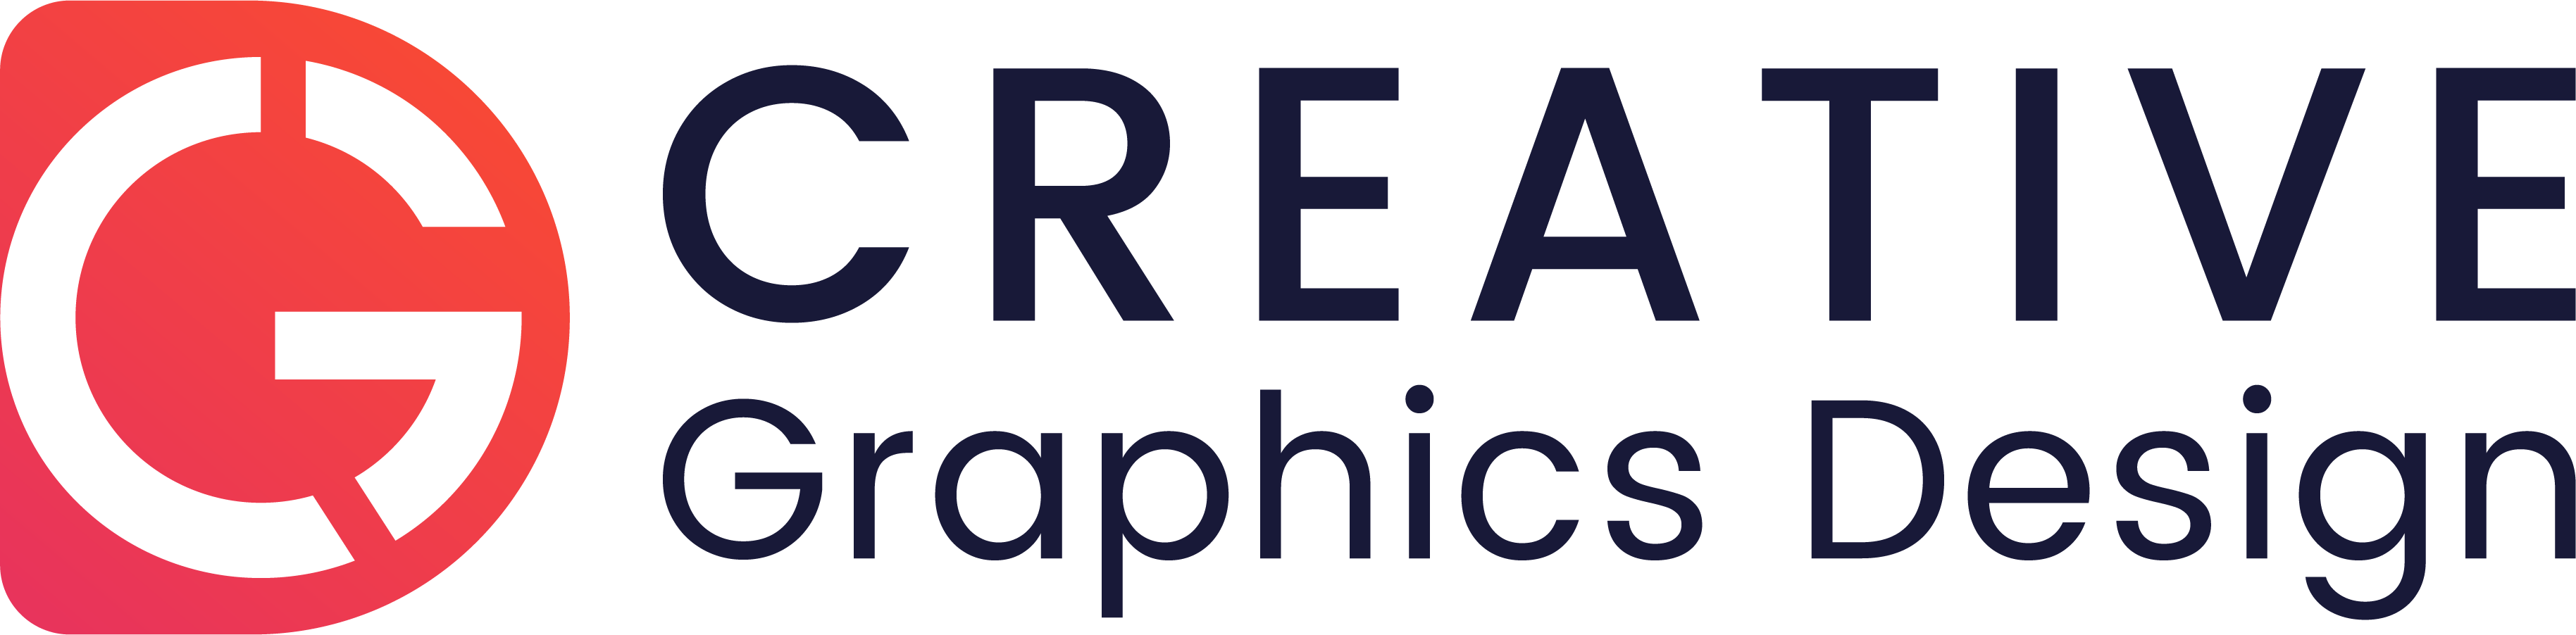 Creative graphics design logo